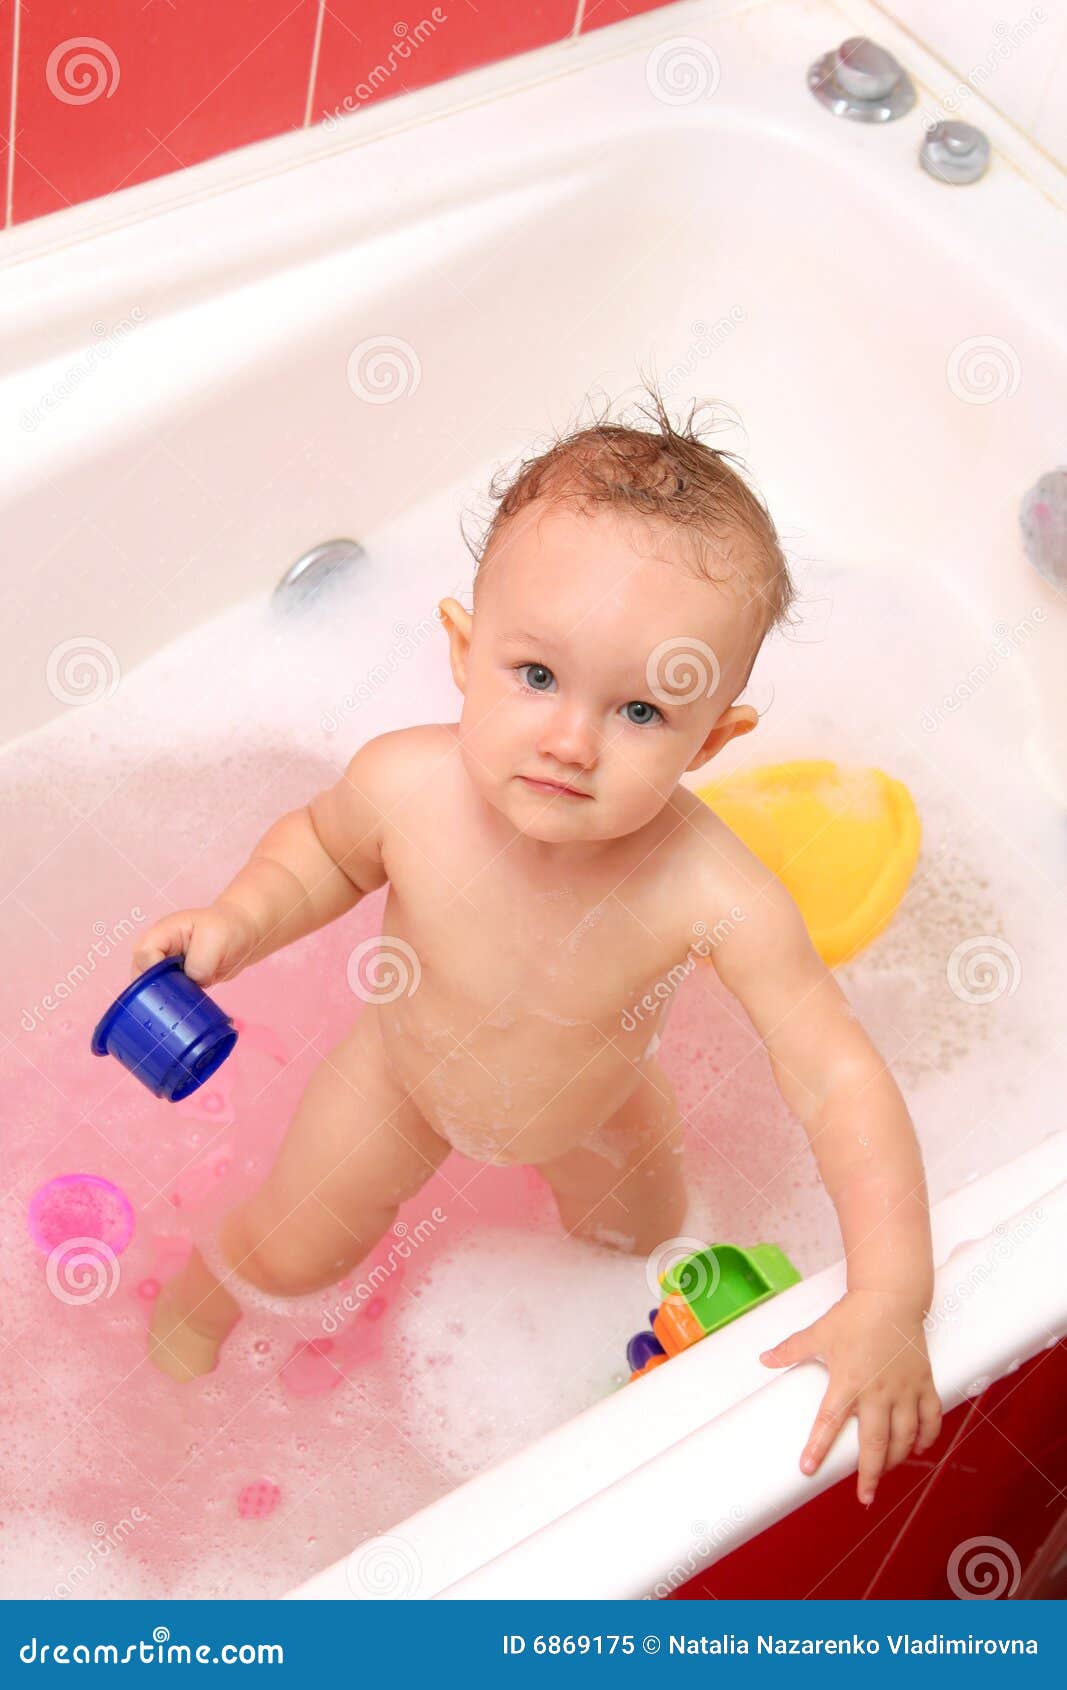 Celebrity Brassai Nude In The Bath Pics